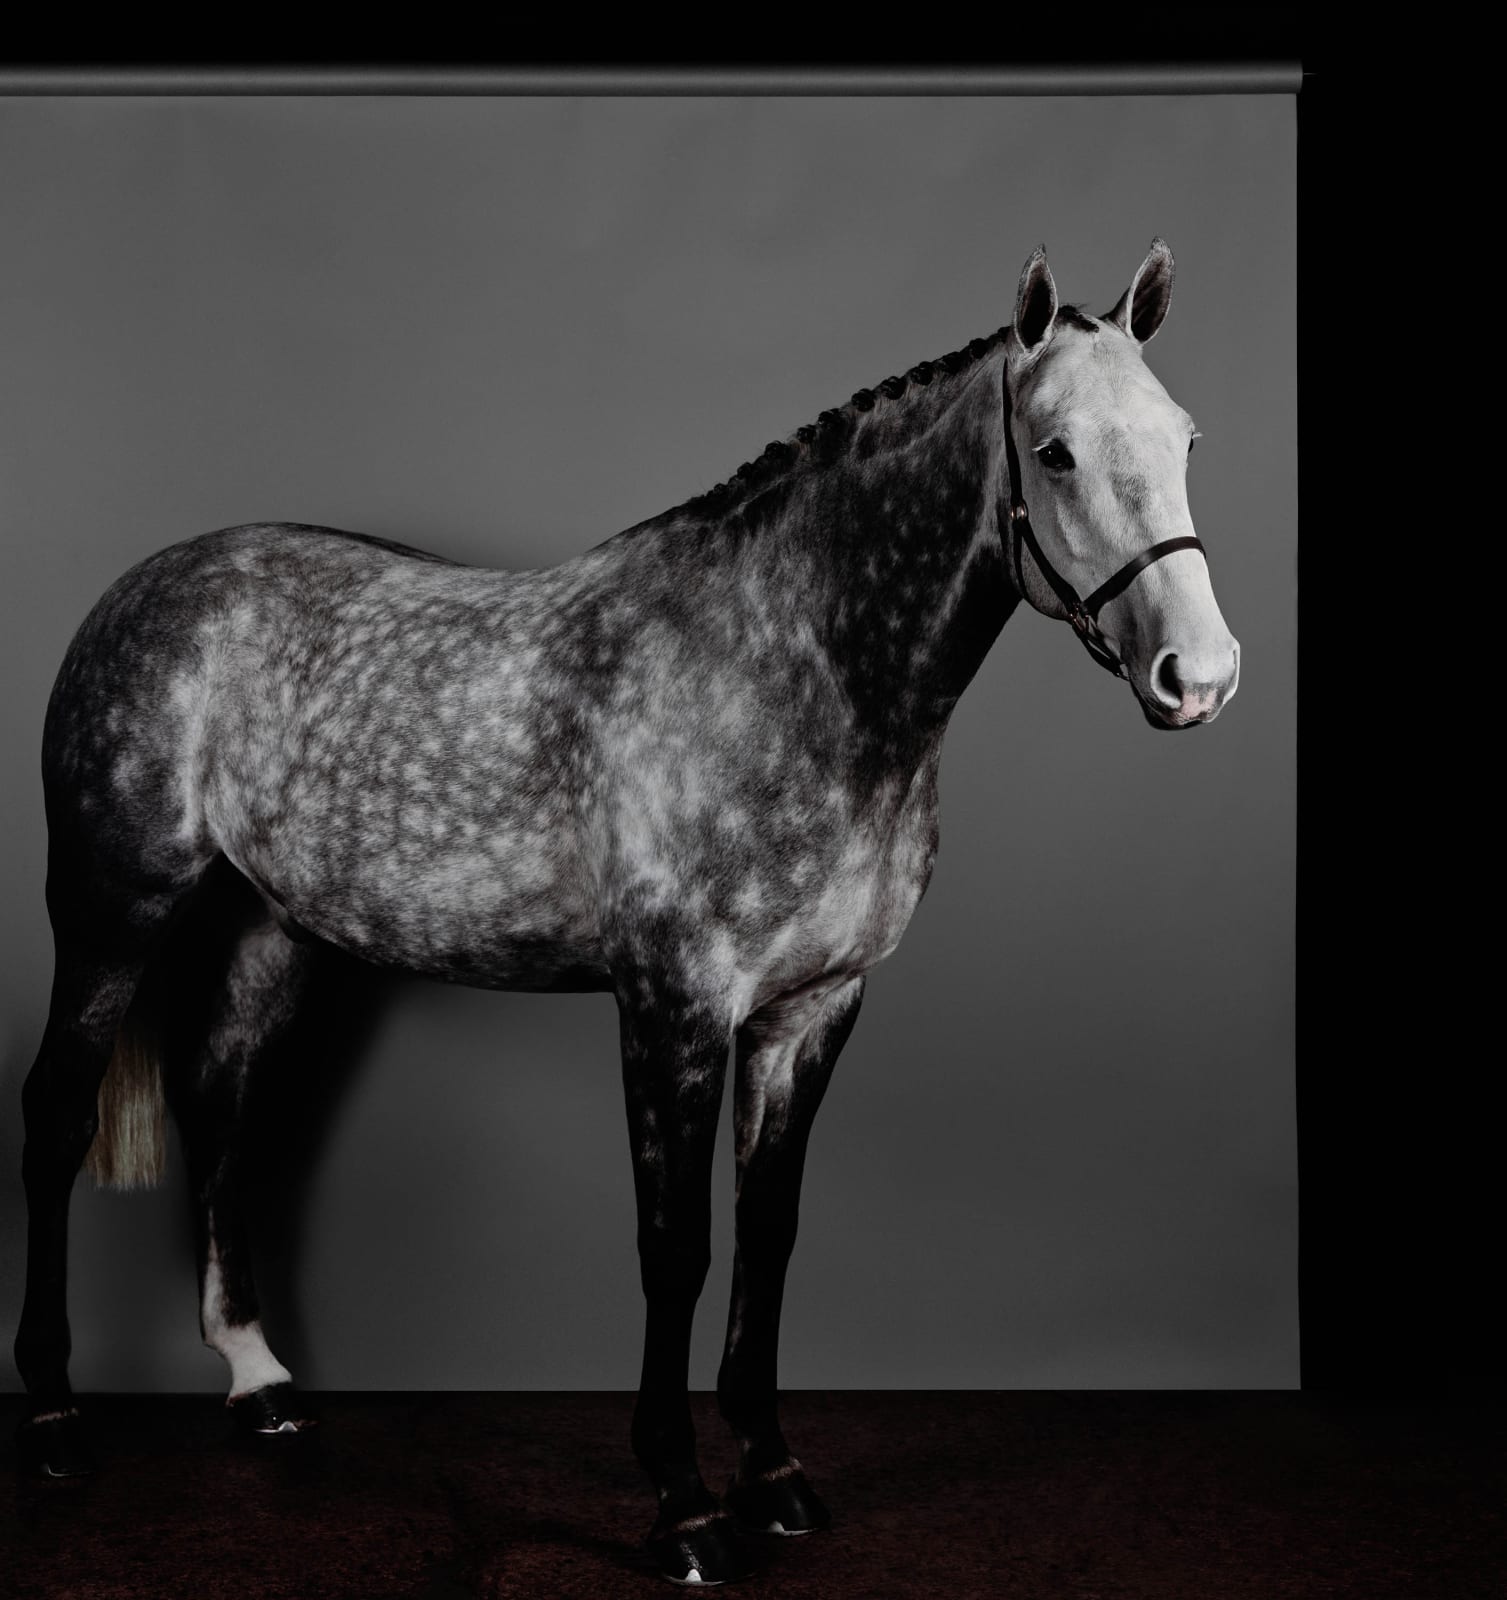 Sarah Jones, Horse (Profile) (Dapple Grey) (II), 2017/18